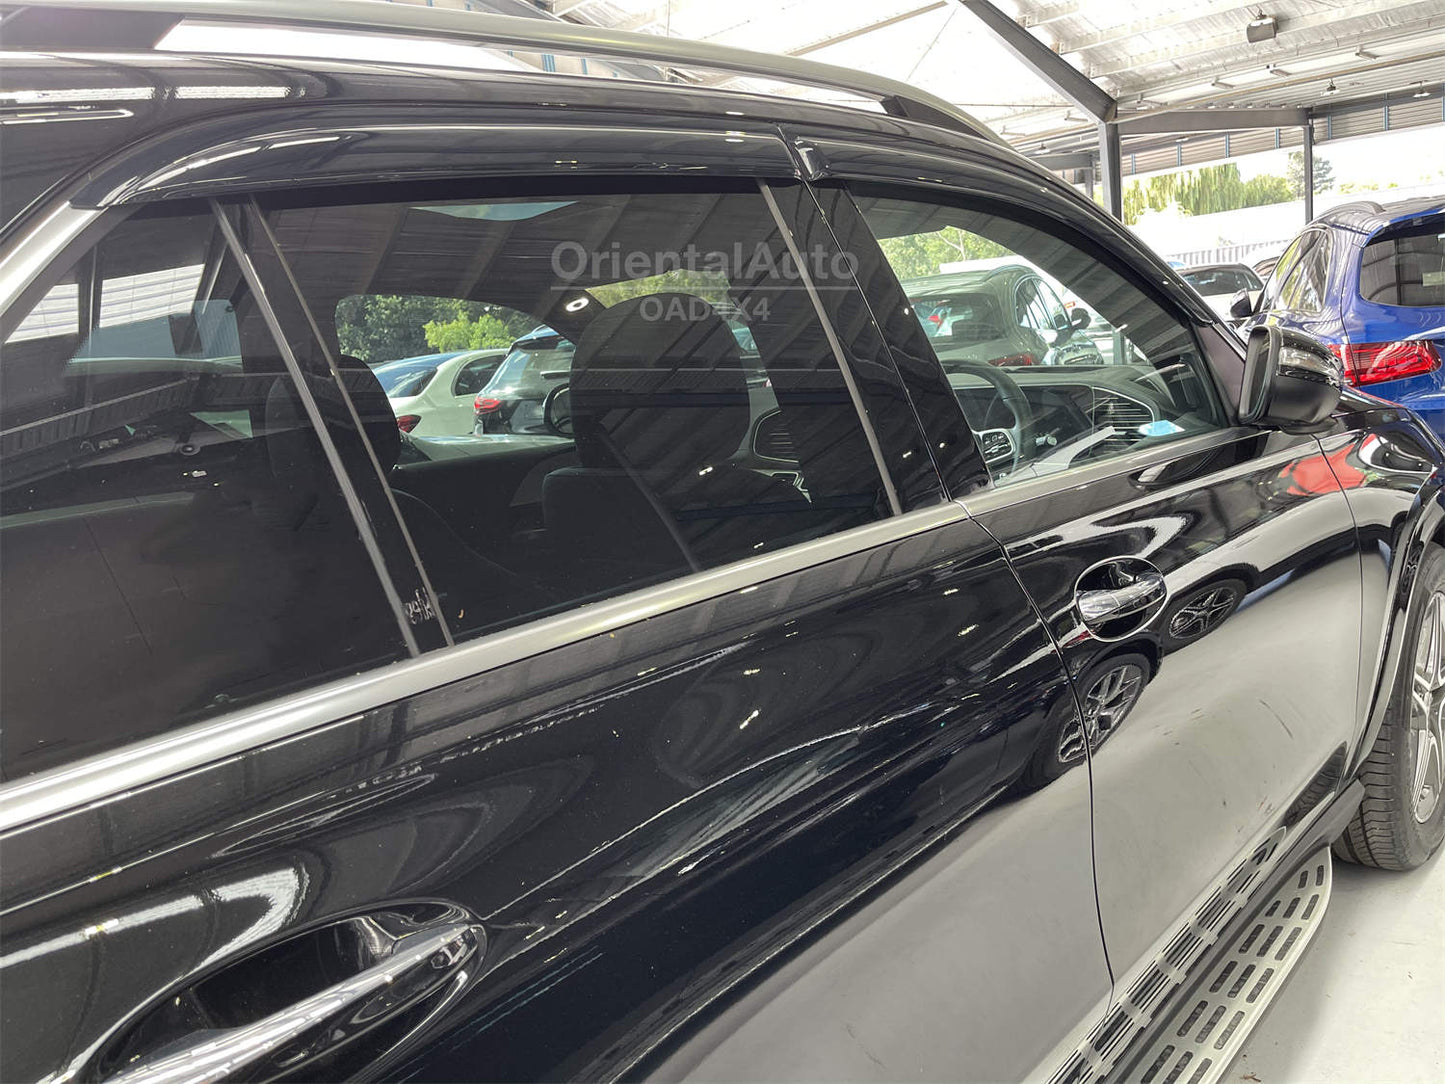 Luxury Weathershields For Mercedes-Benz GLE Class V167 2019+ Weather Shields Window Visors